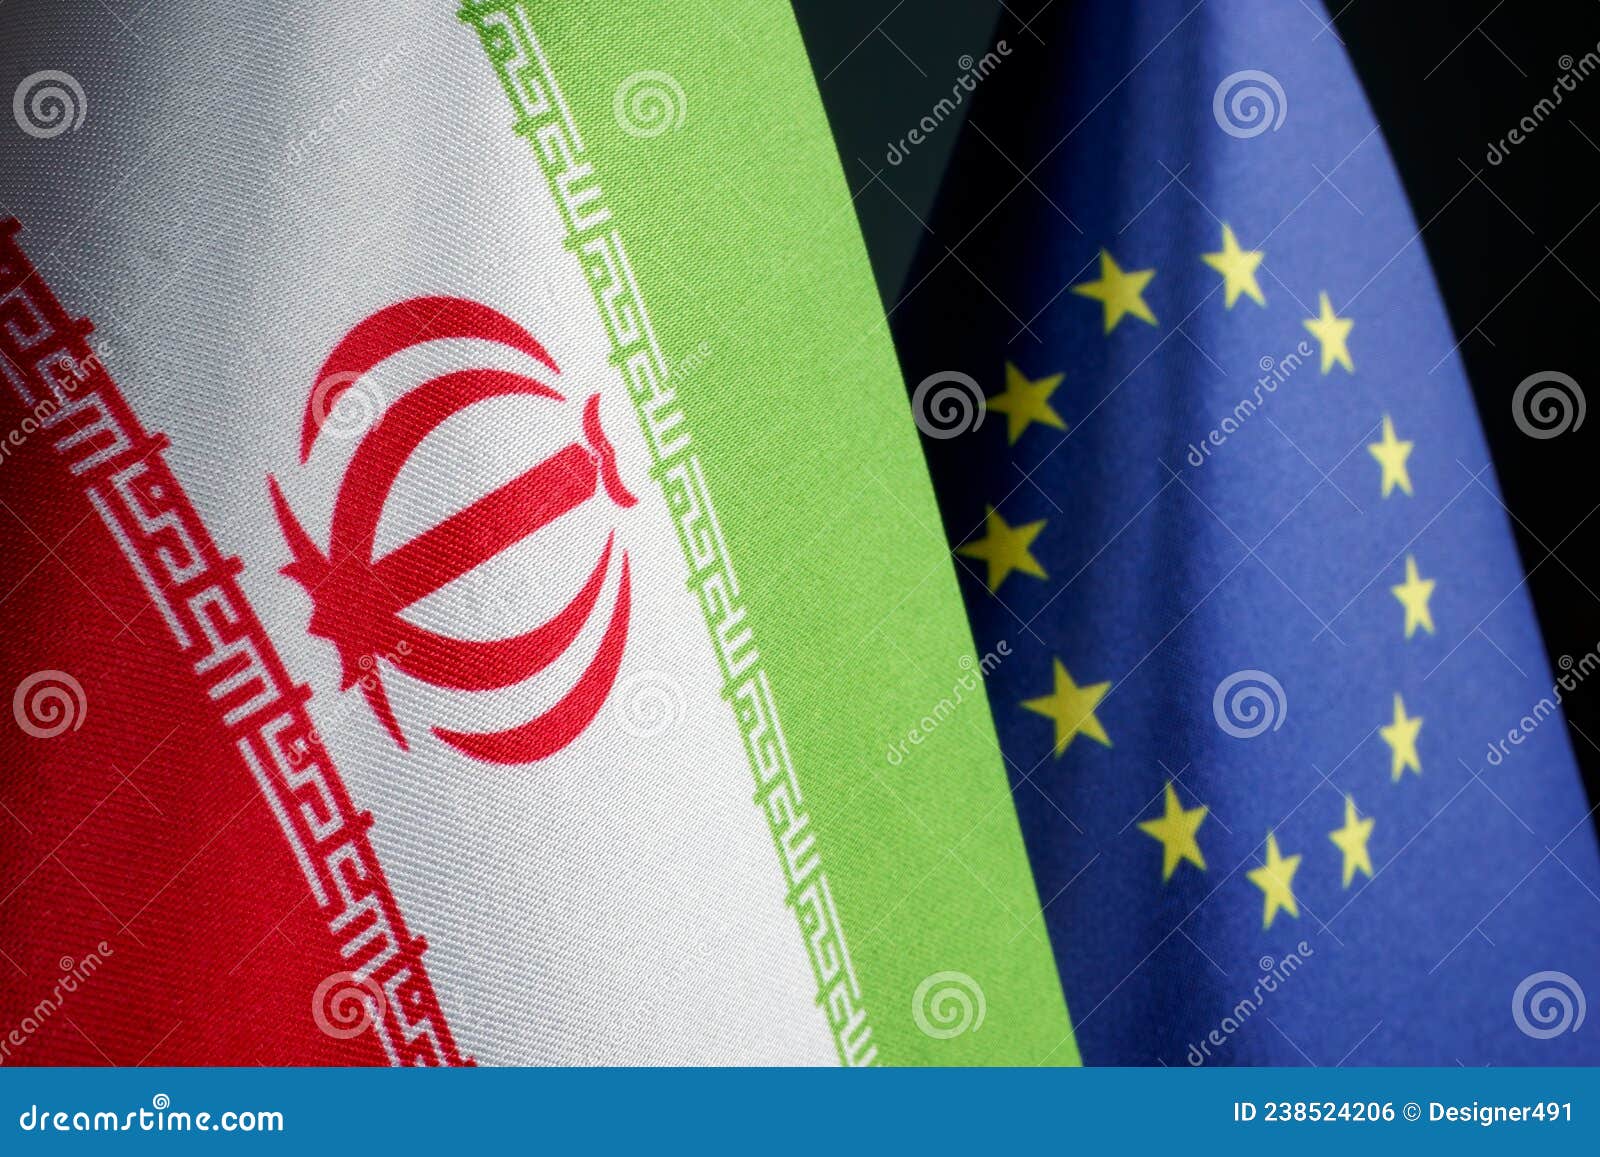 flags of iran and eu europe union.